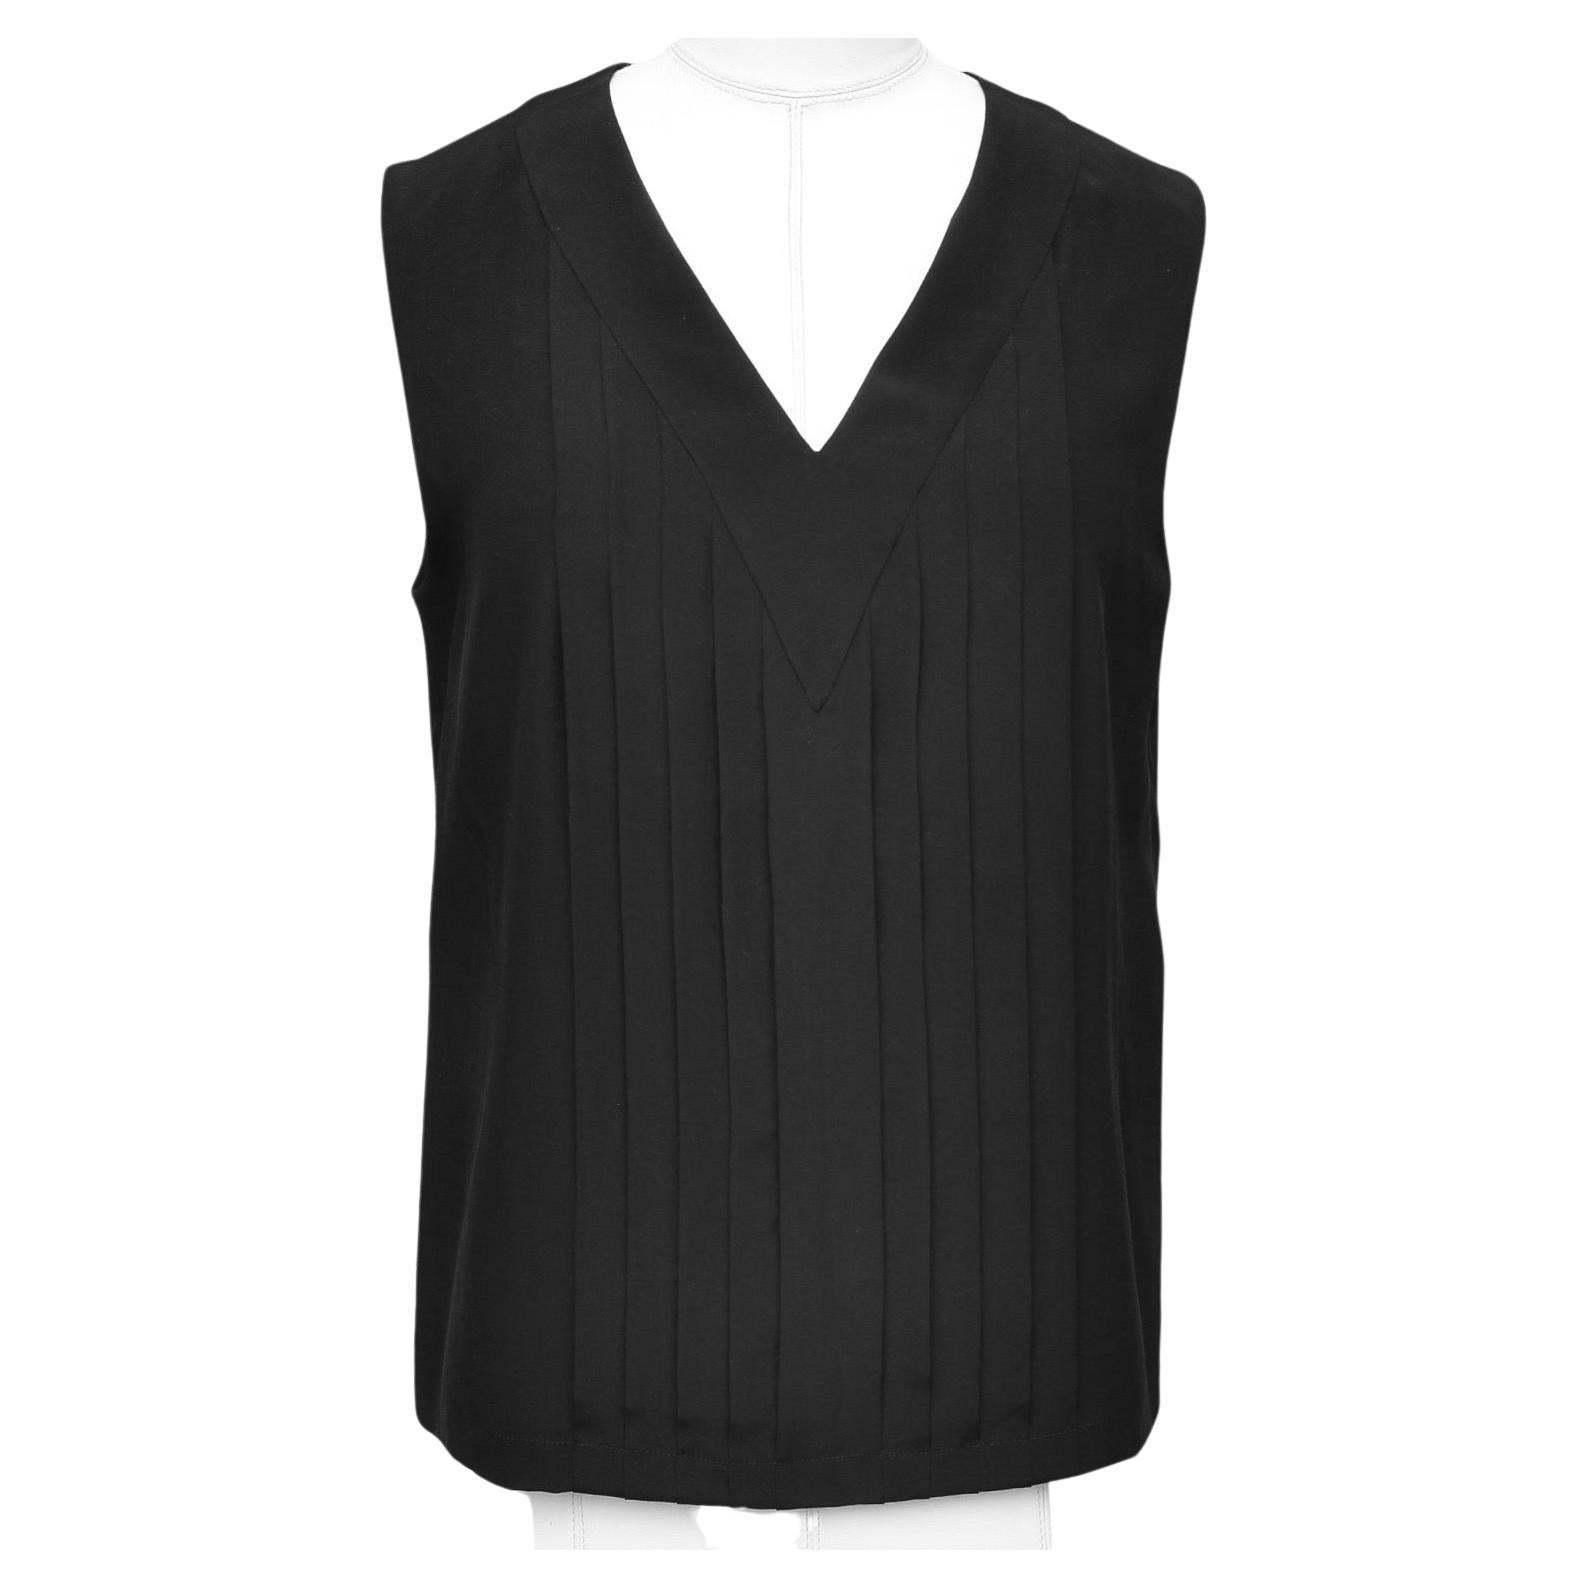 CHANEL Black Silk Blouse Sleeveless Top Shirt Pleats V-Neck Buttons Sz 36 For Sale